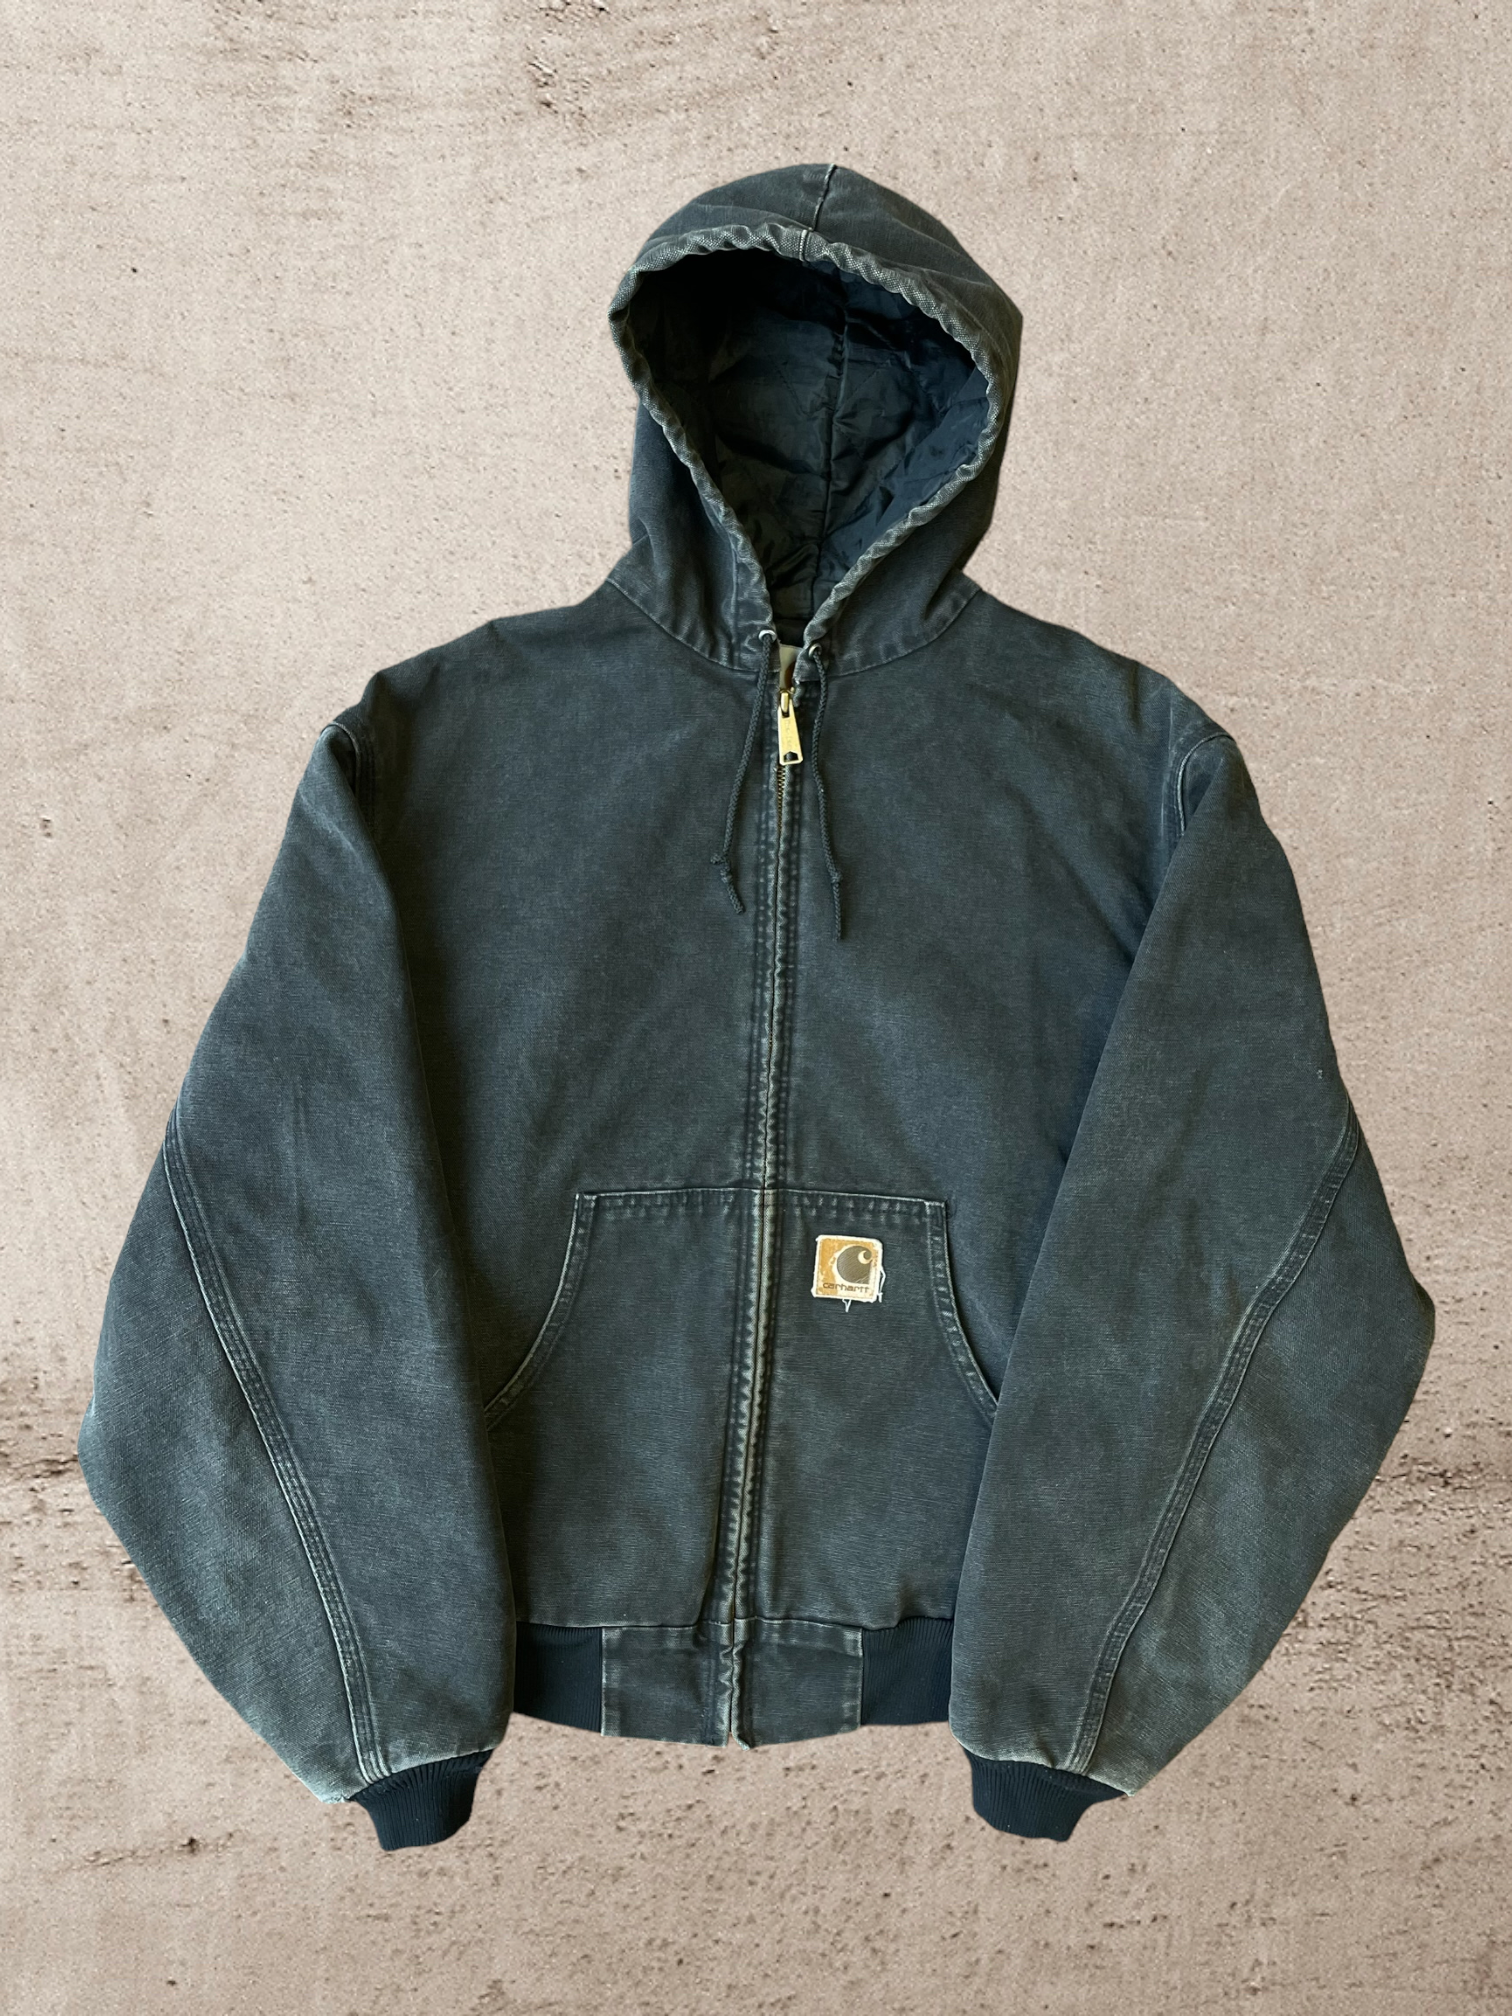 80s Carhartt Hooded Jacket - X-Large